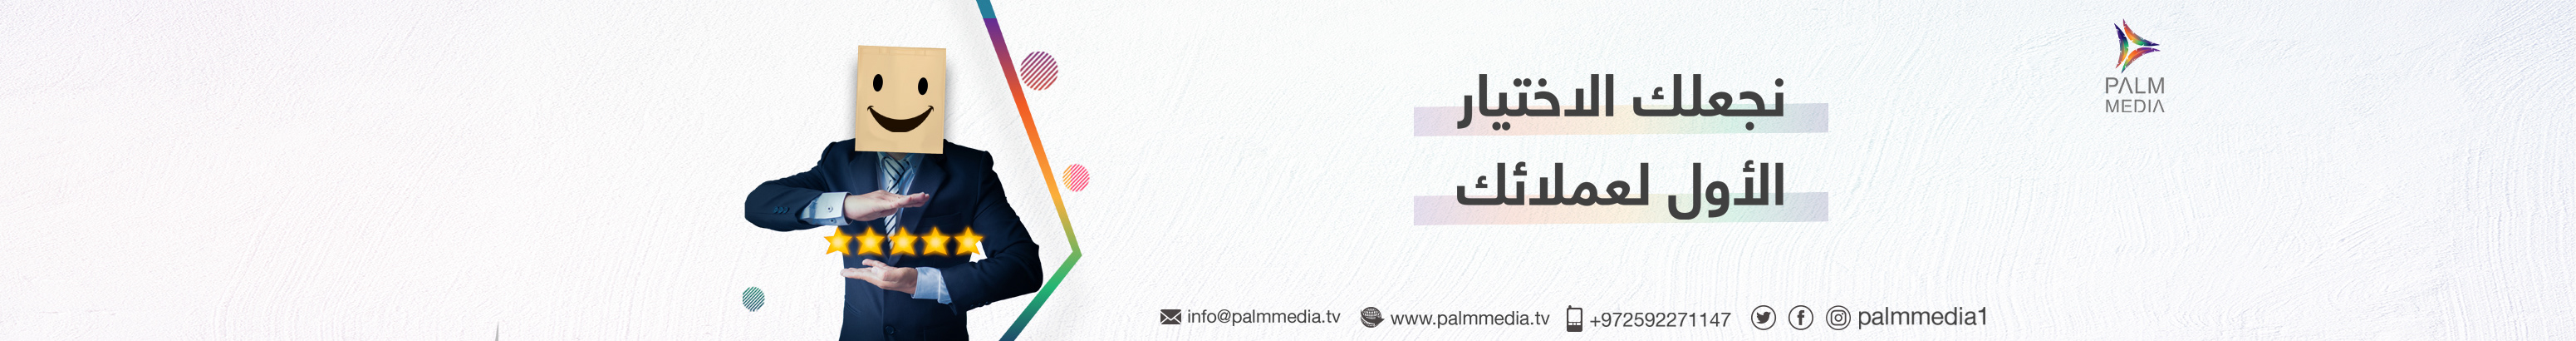 Palm Media's profile banner